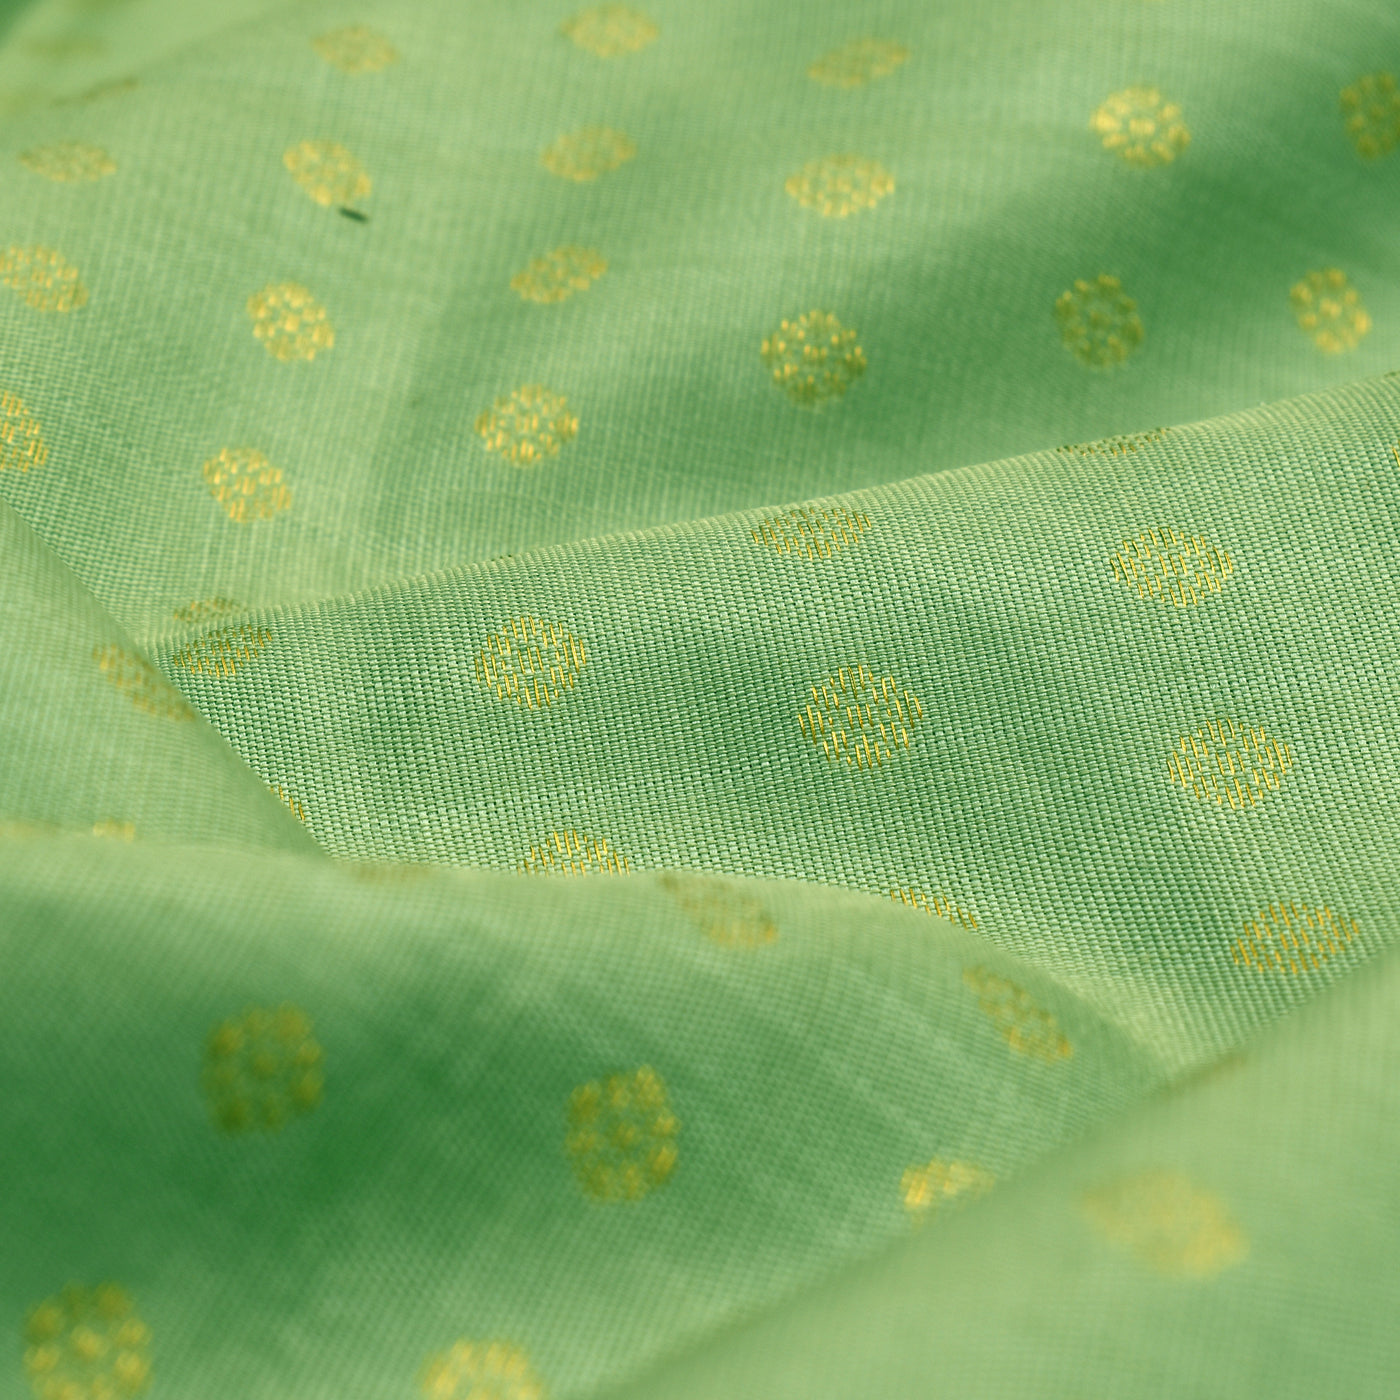 Mint Green Kanchi Silk Fabric with Small Kamalam Butta Design